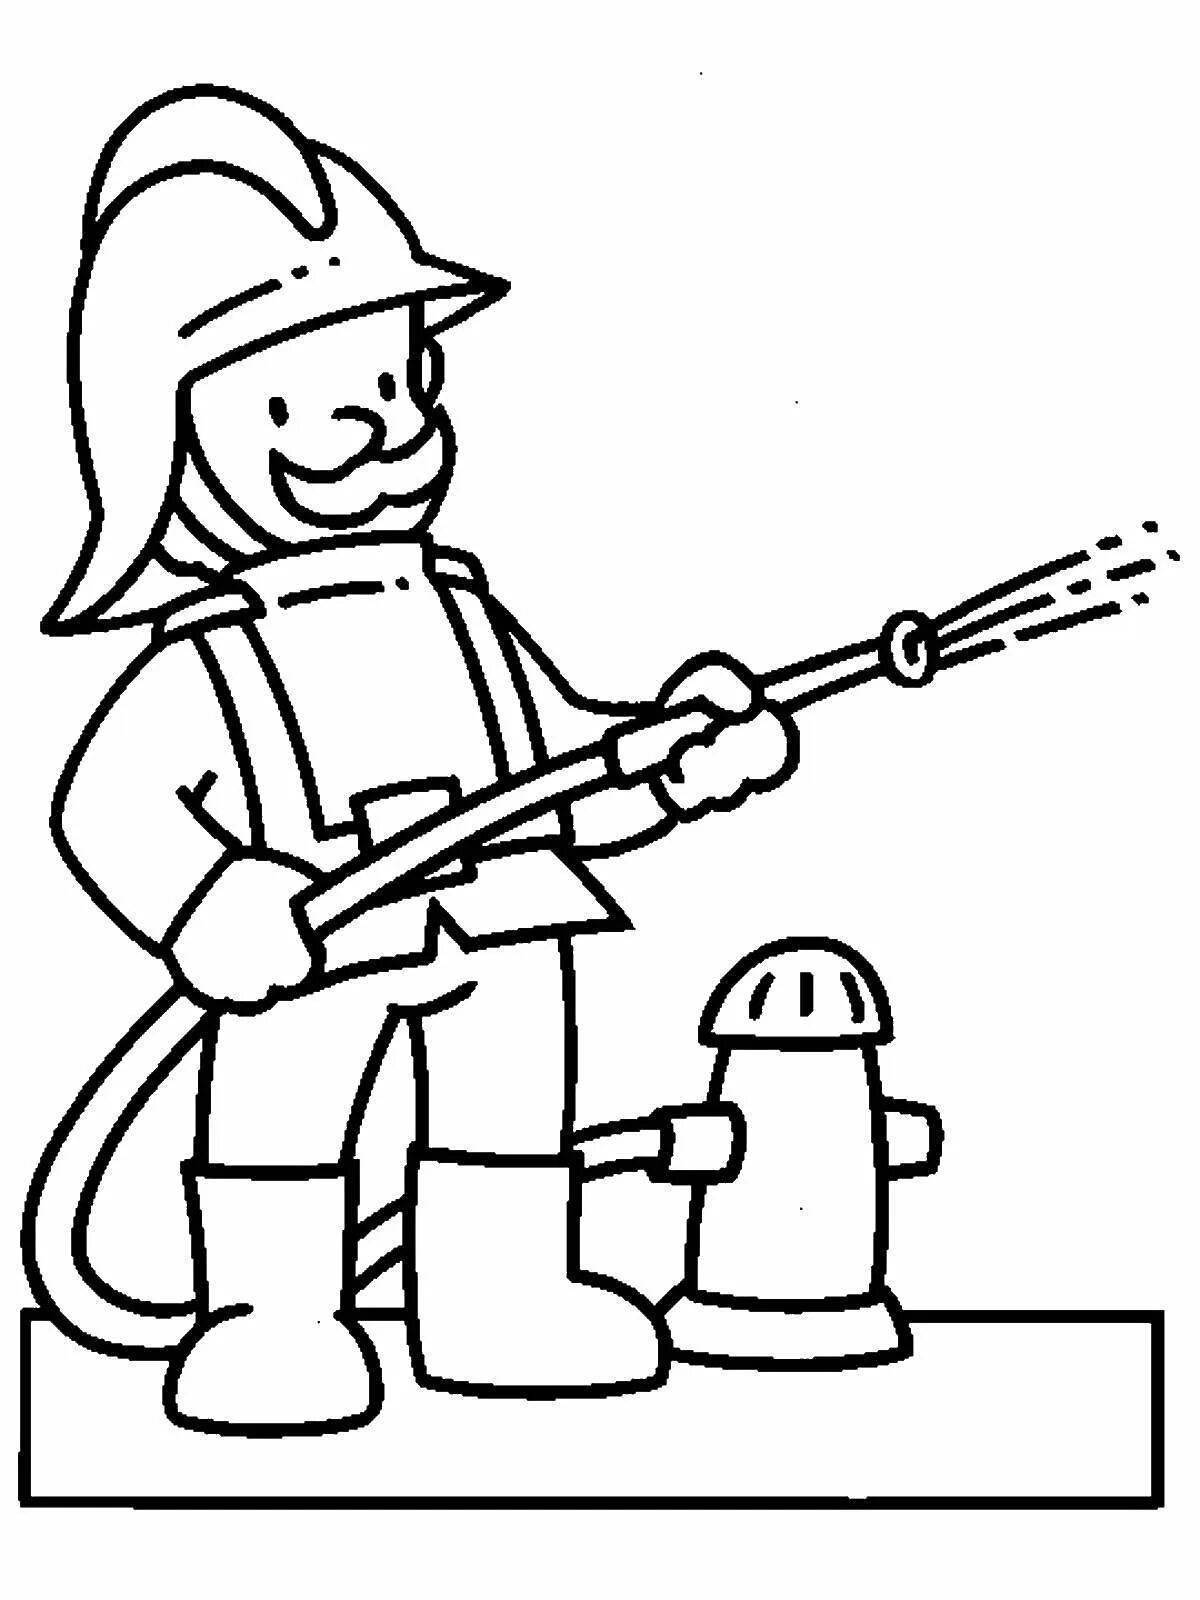 Innovative fireman drawing for kids